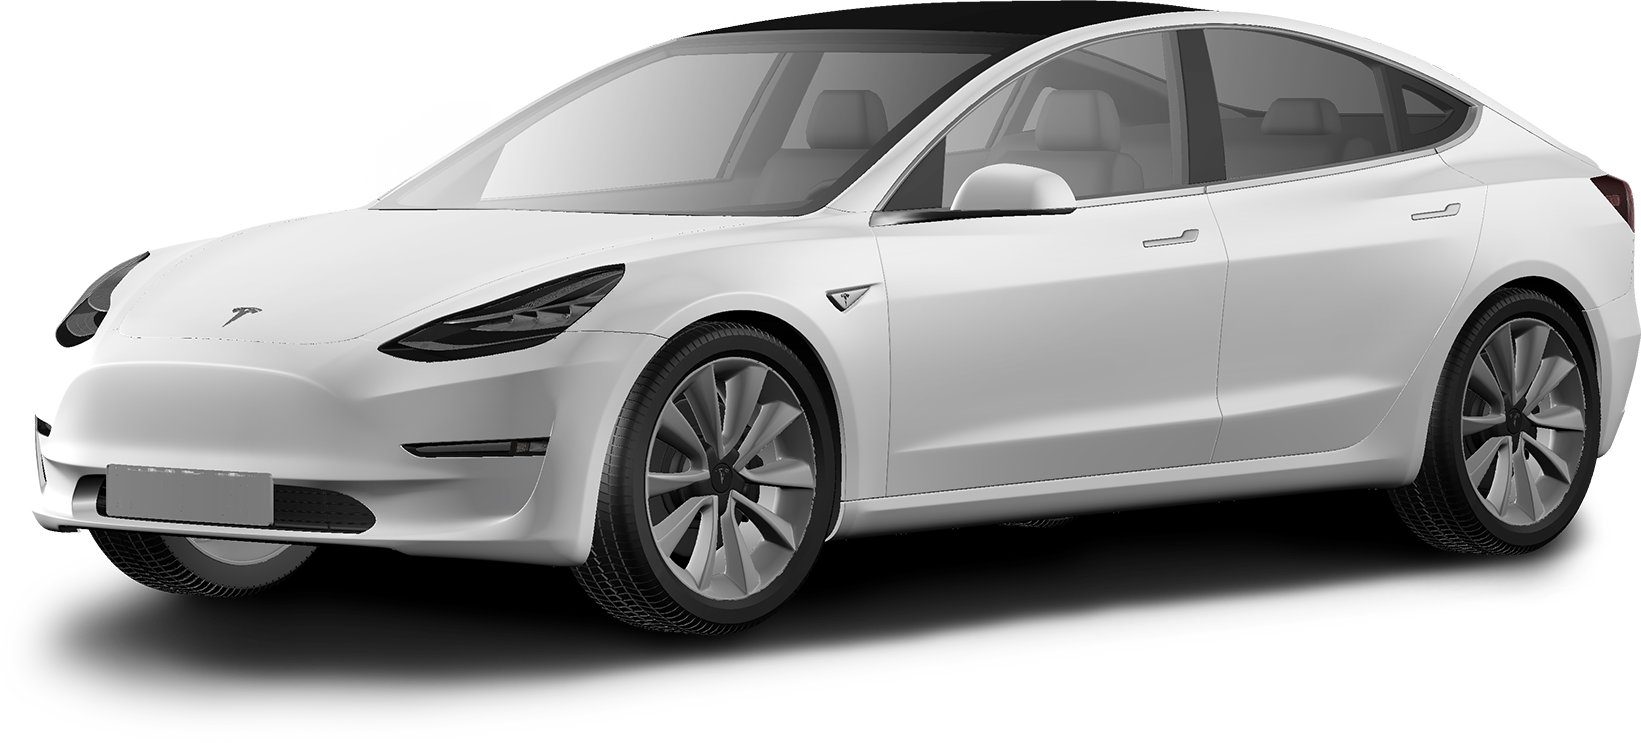 Download PNG image - Tesla Car PNG 